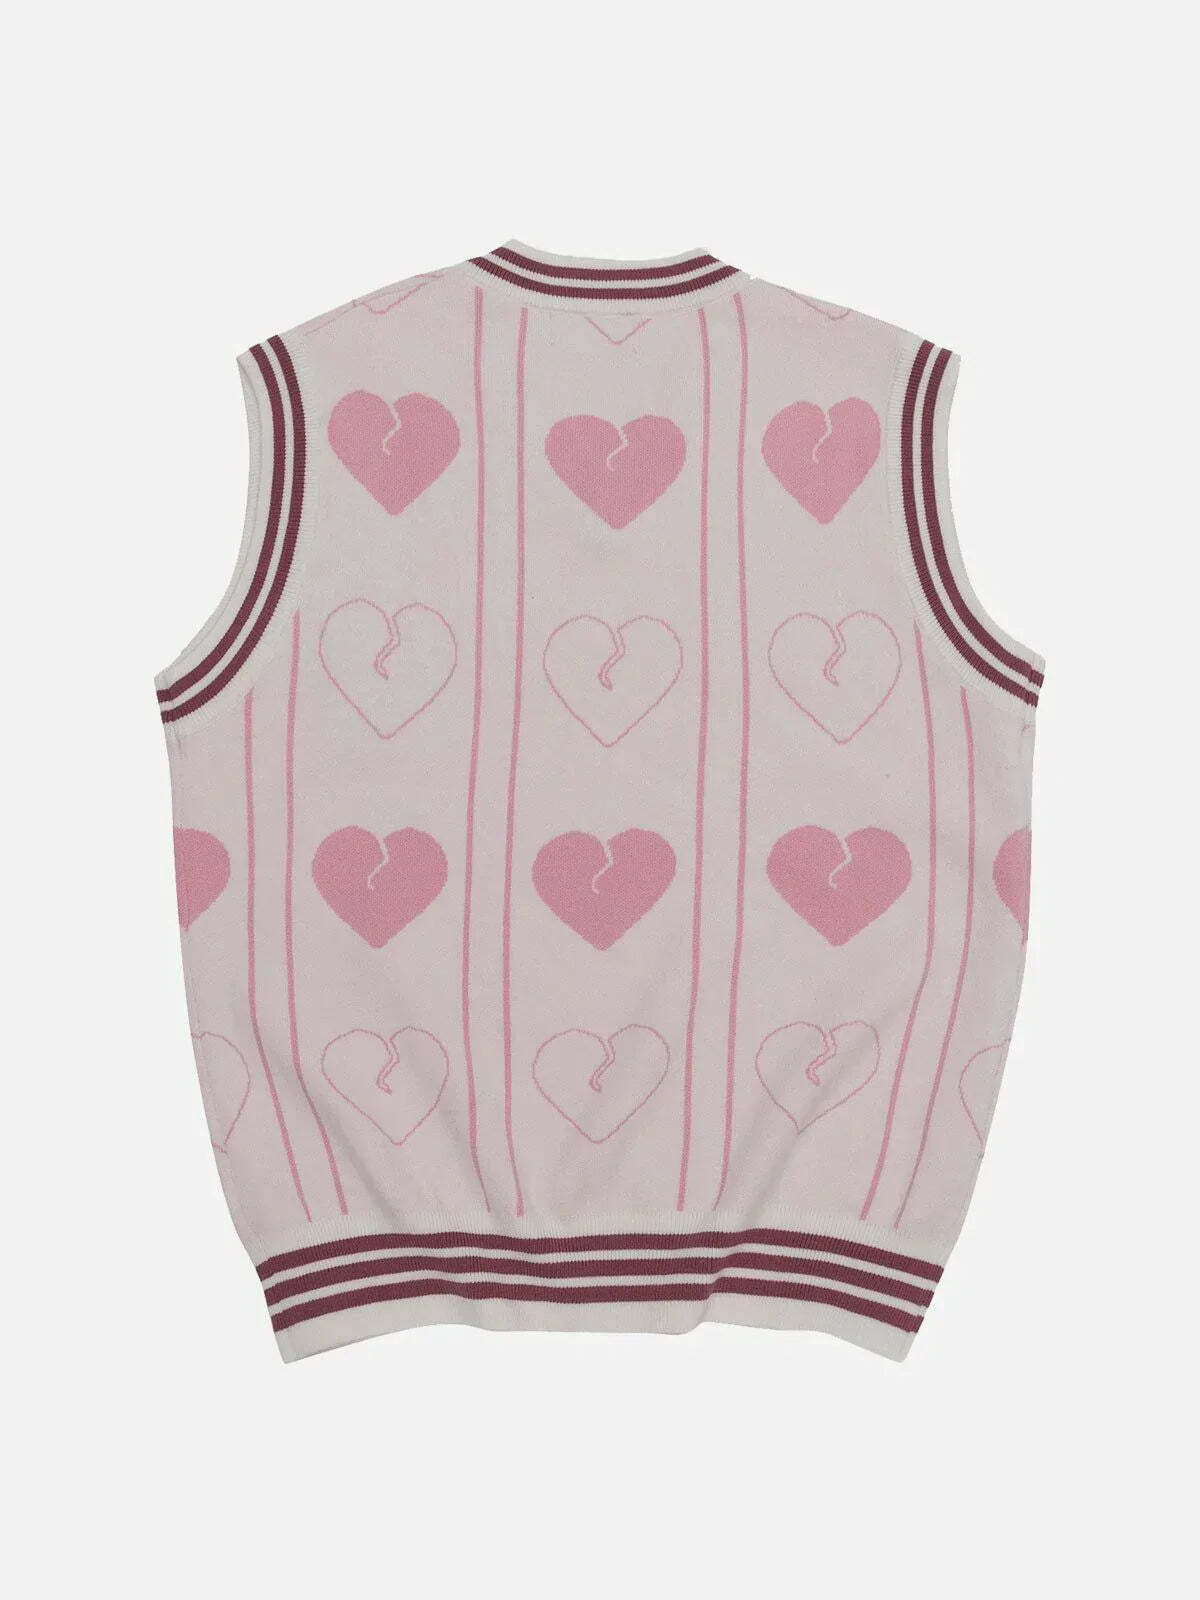 colorblock heart sweater vest edgy & vibrant streetwear 4407